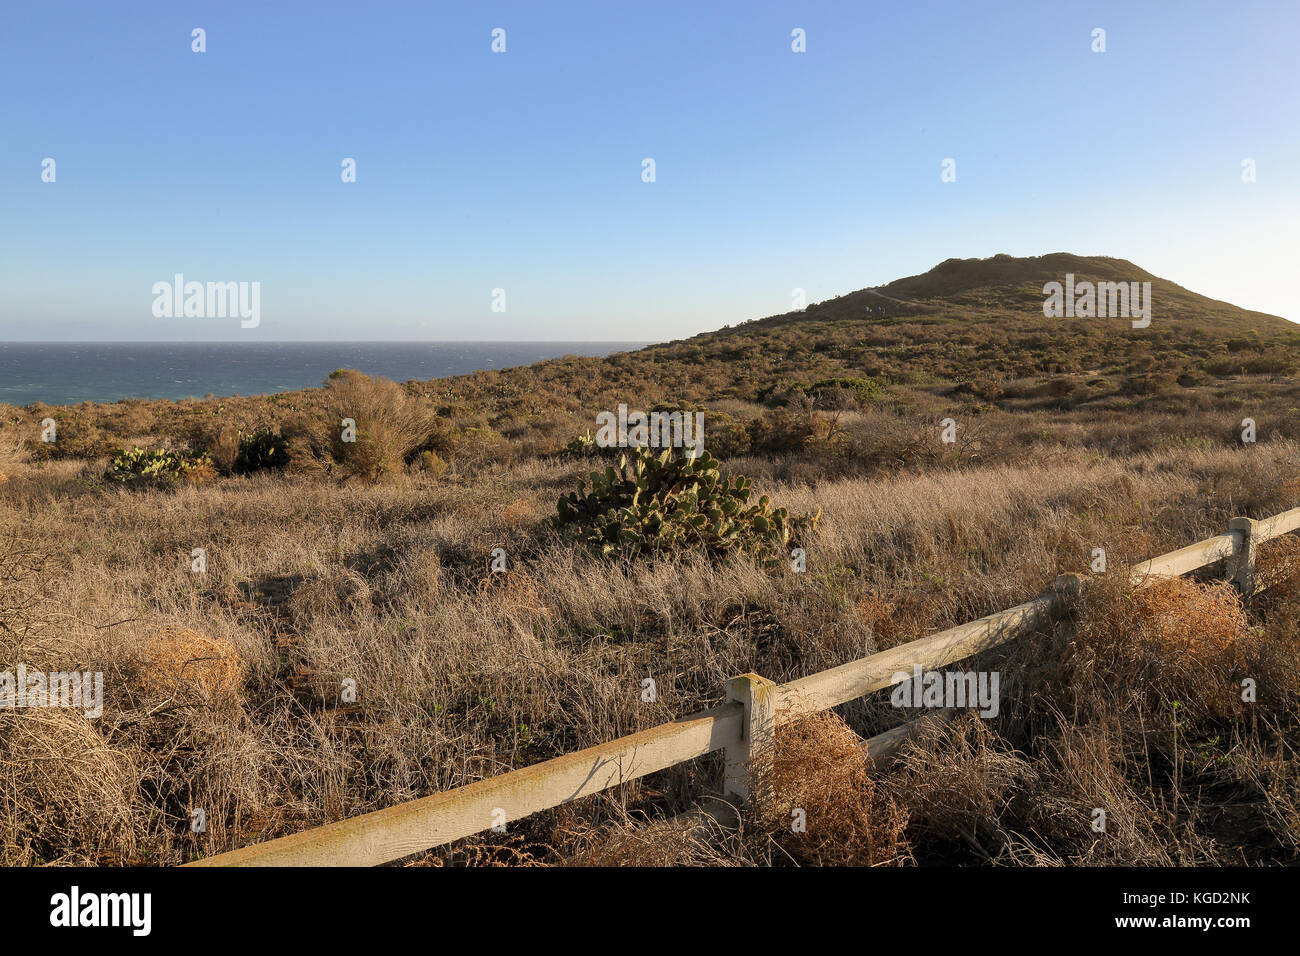 Point dume Naturschutzgebiet, Malibu Kalifornien Stockfoto